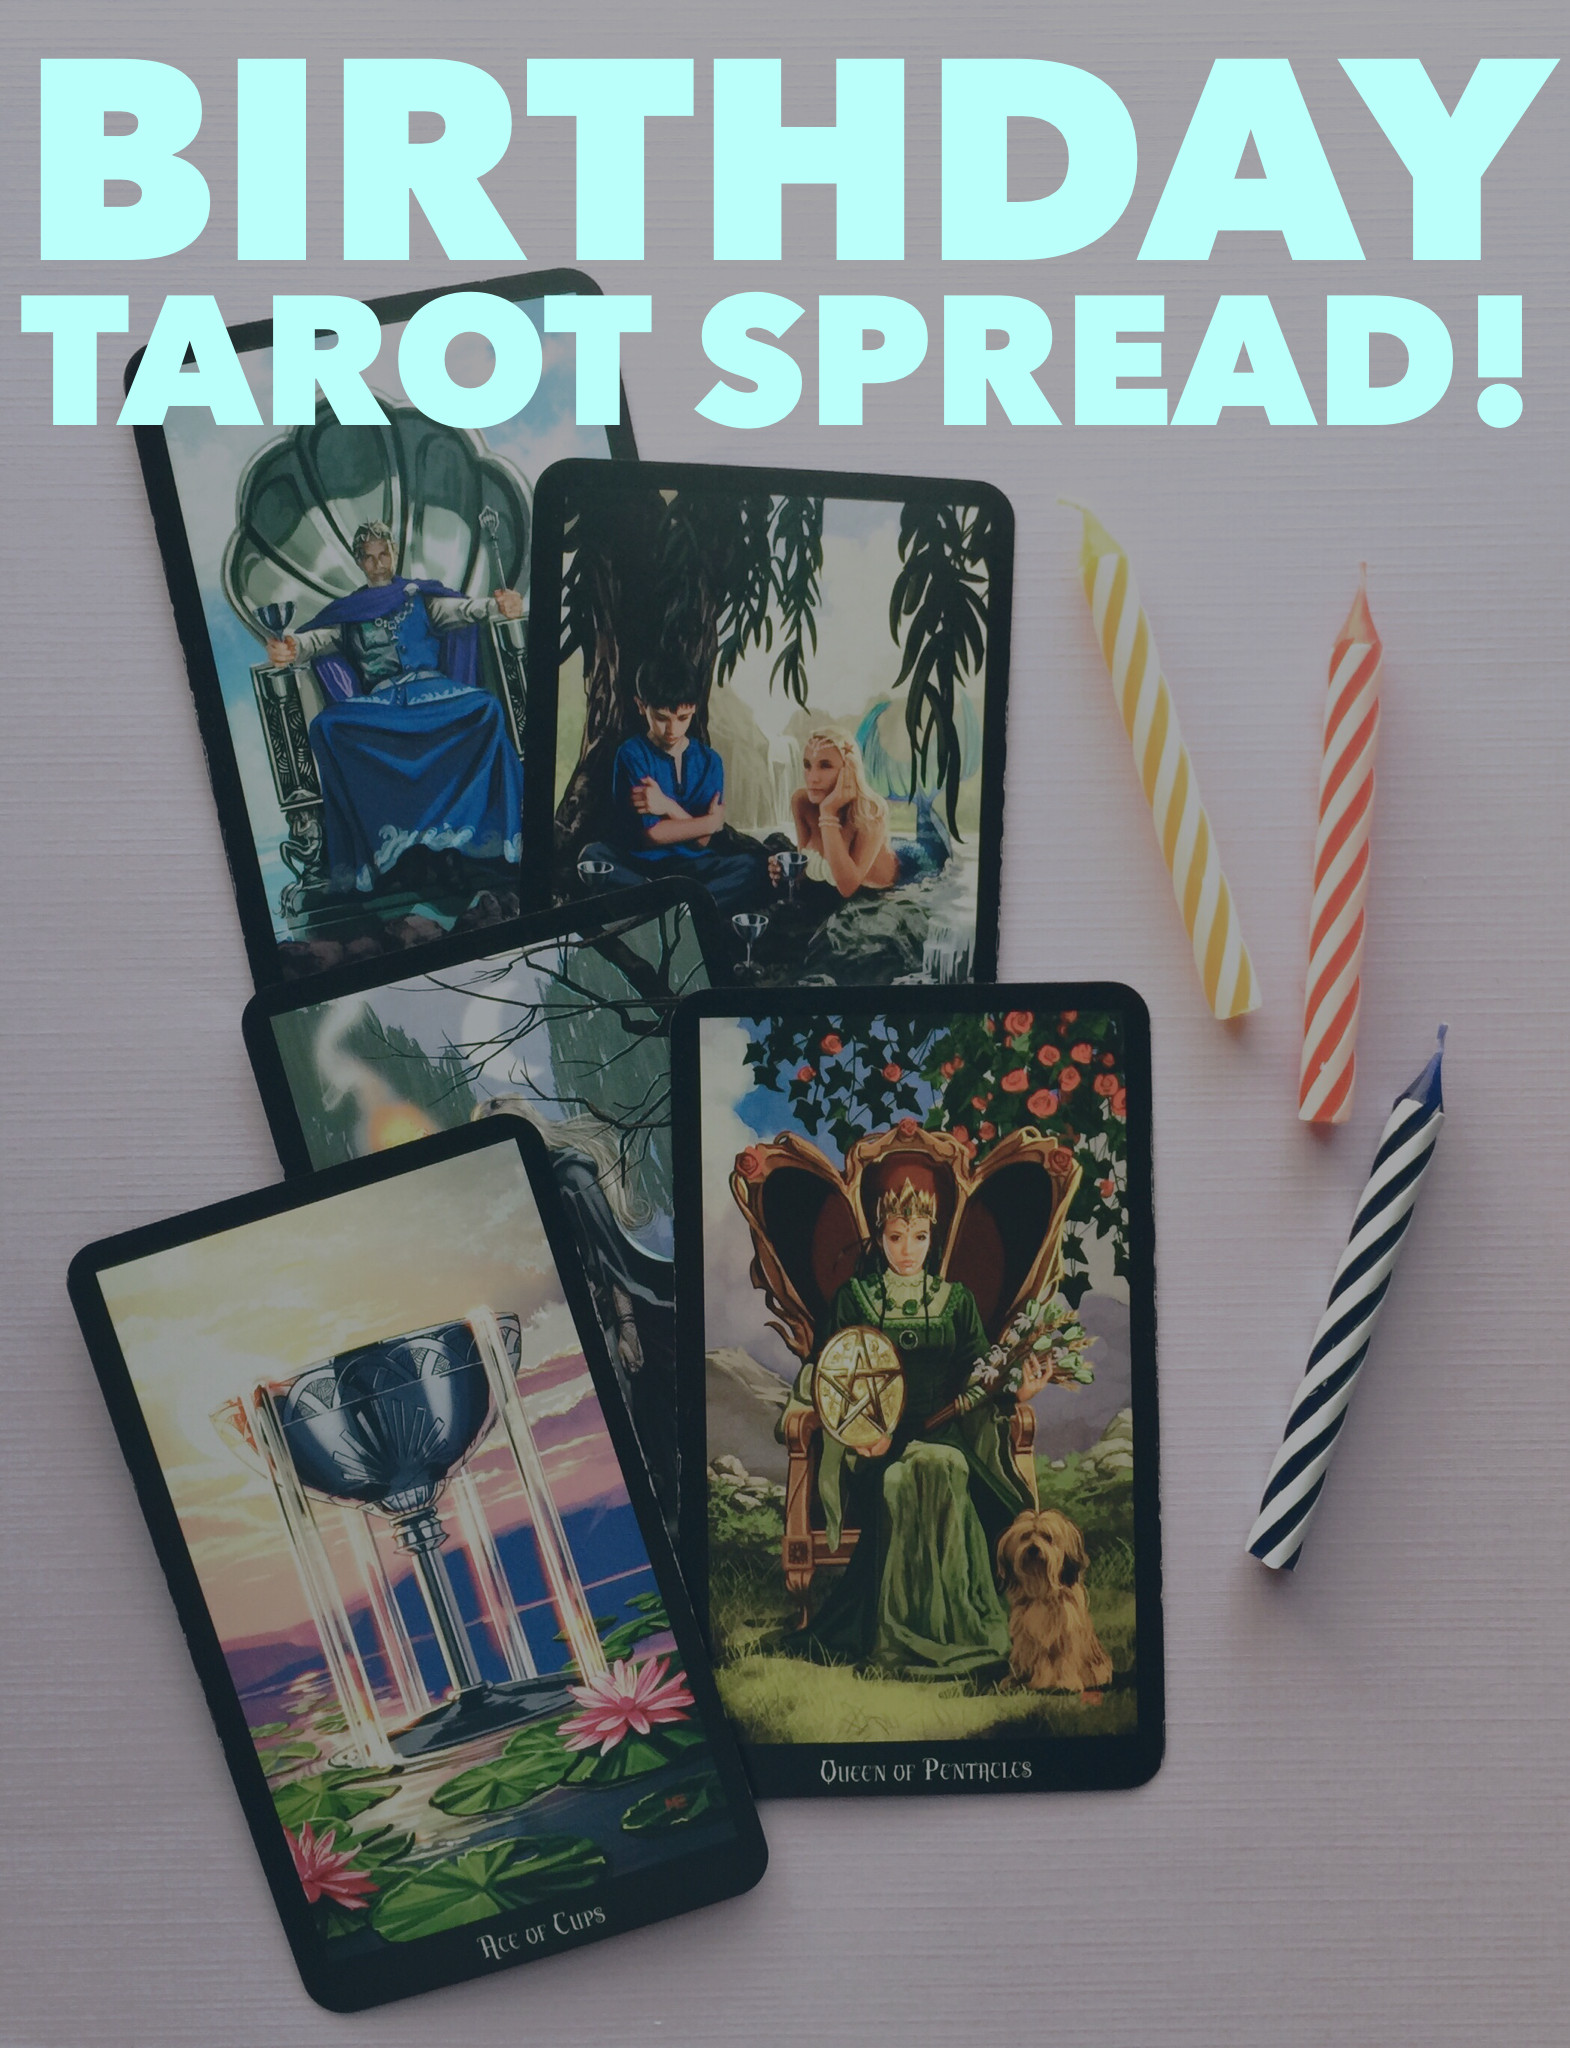 Birthday Tarot Card
 Birthday Tarot Spread and Ceremony – Spiritual Guidance